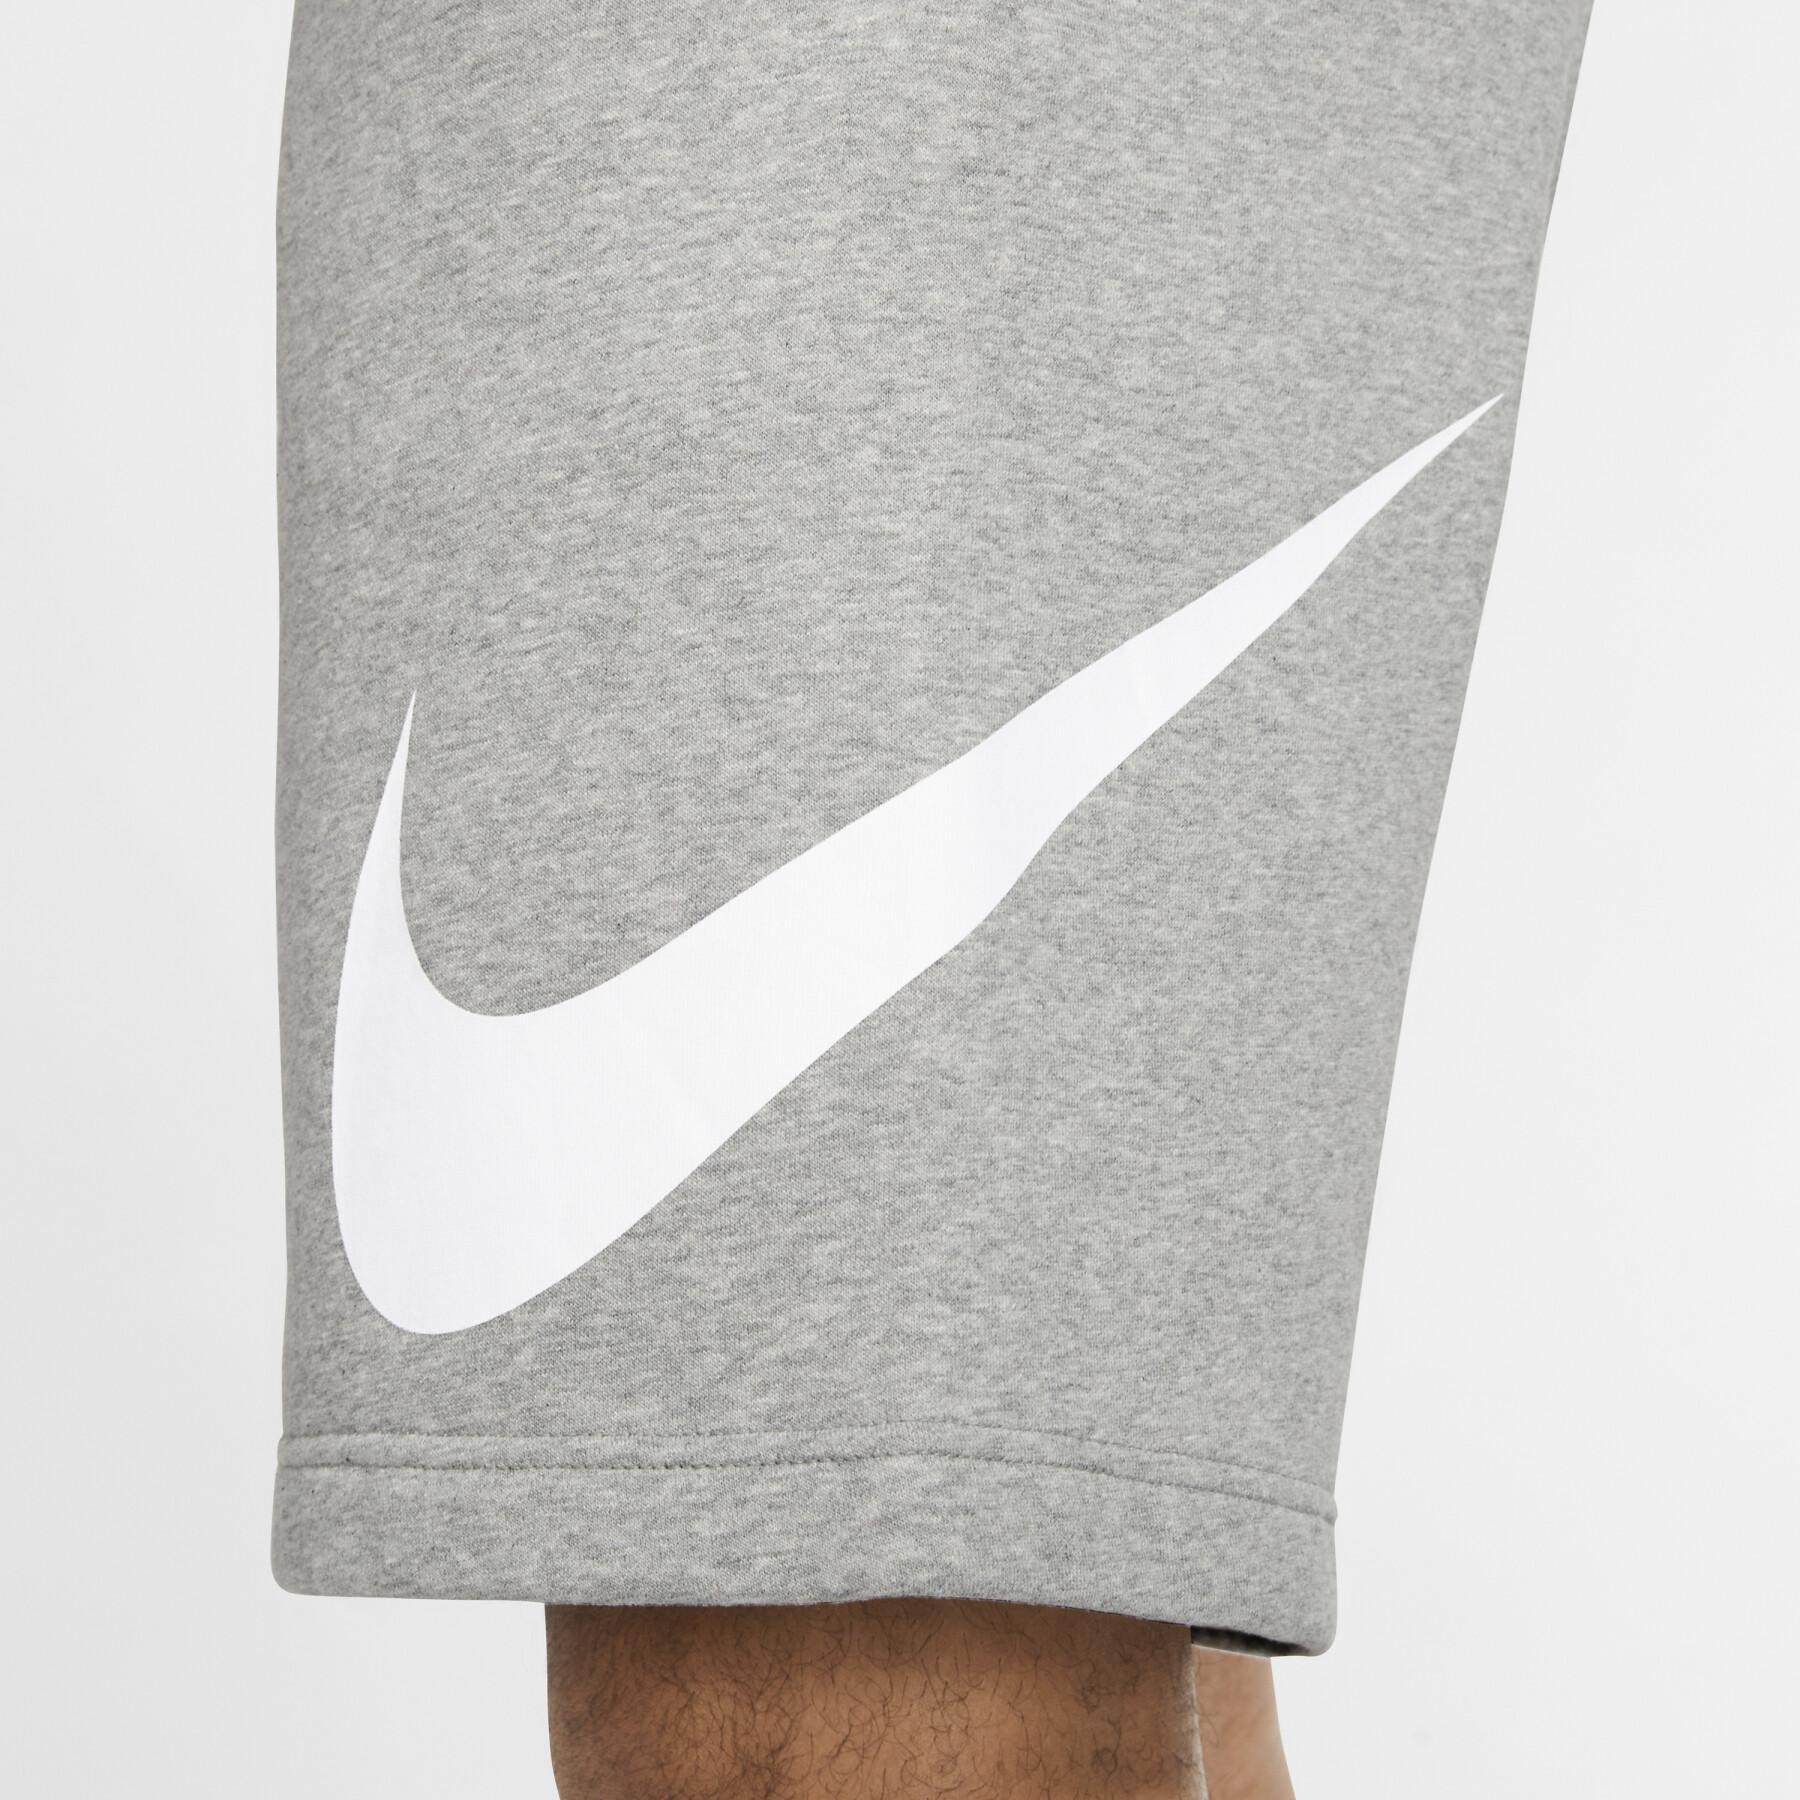 Pantalón corto Nike Sportswear Club